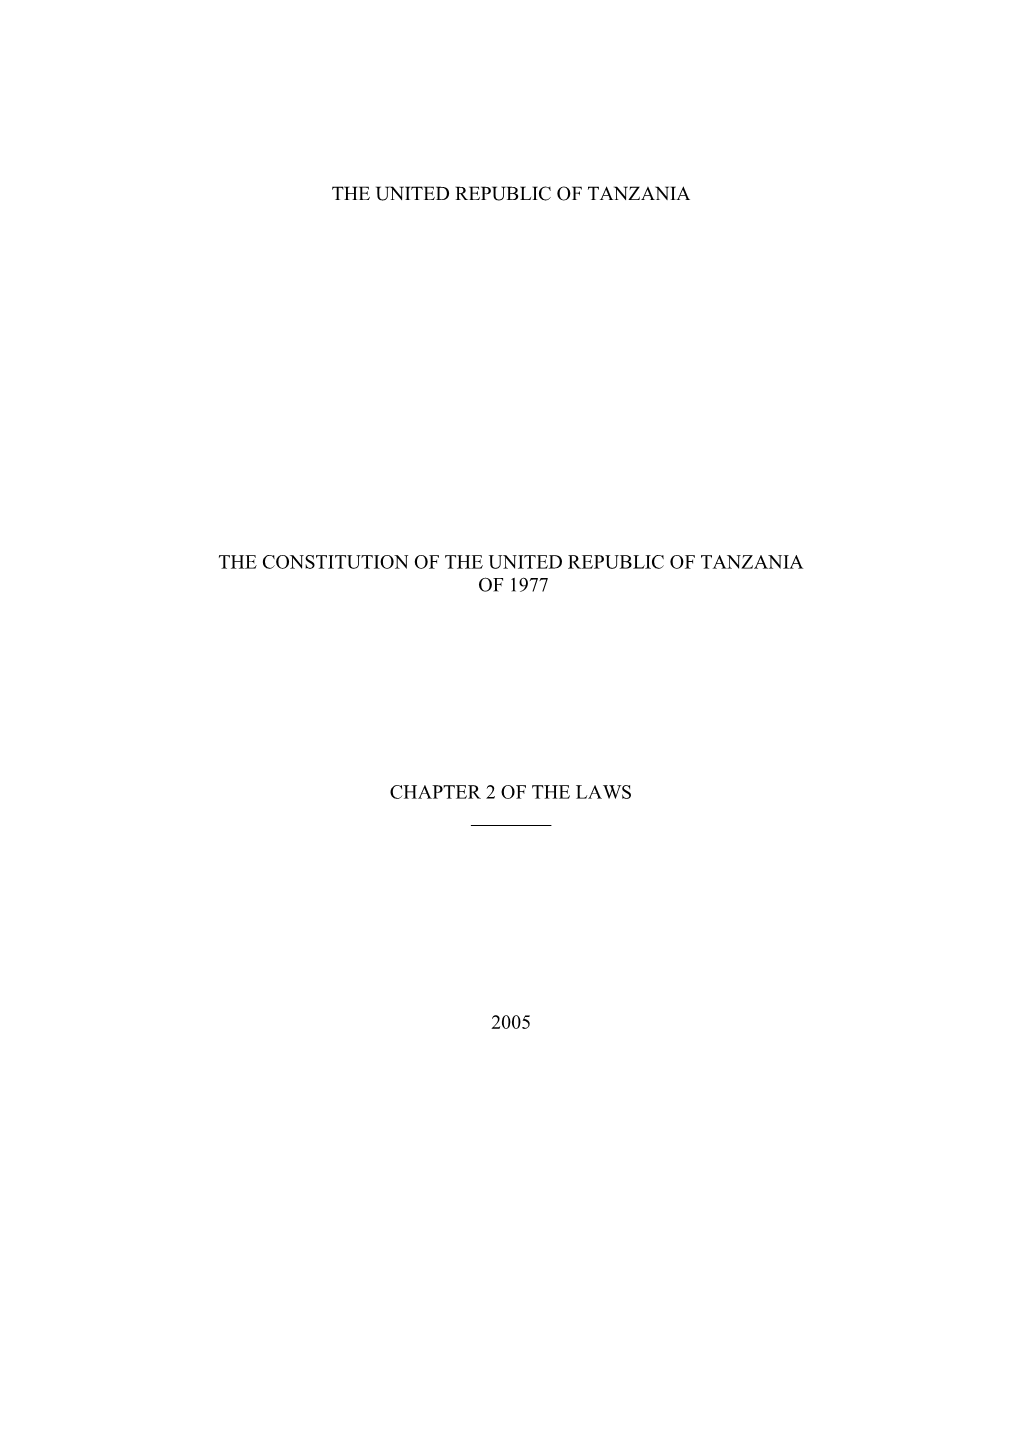 Constitution of the United Republic of Tanzania of 1977